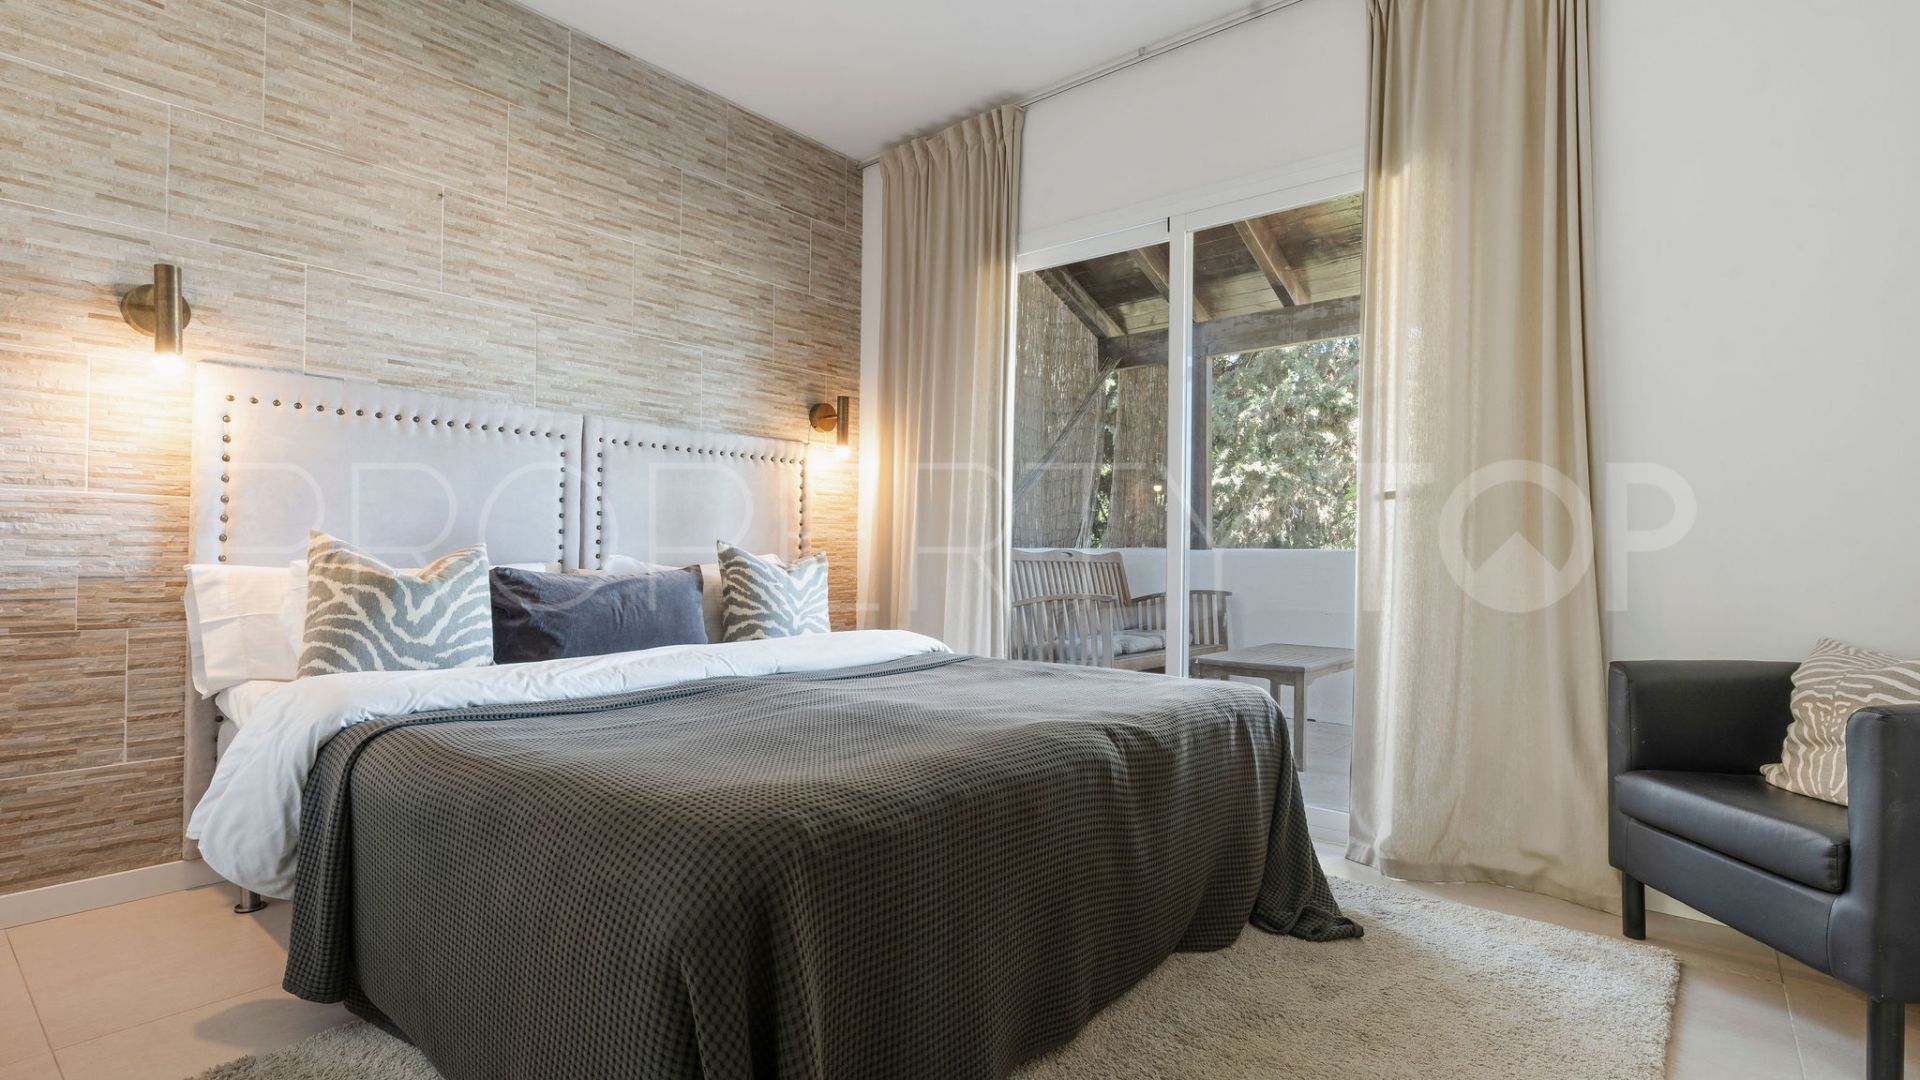 4 bedrooms villa in Nueva Andalucia for sale